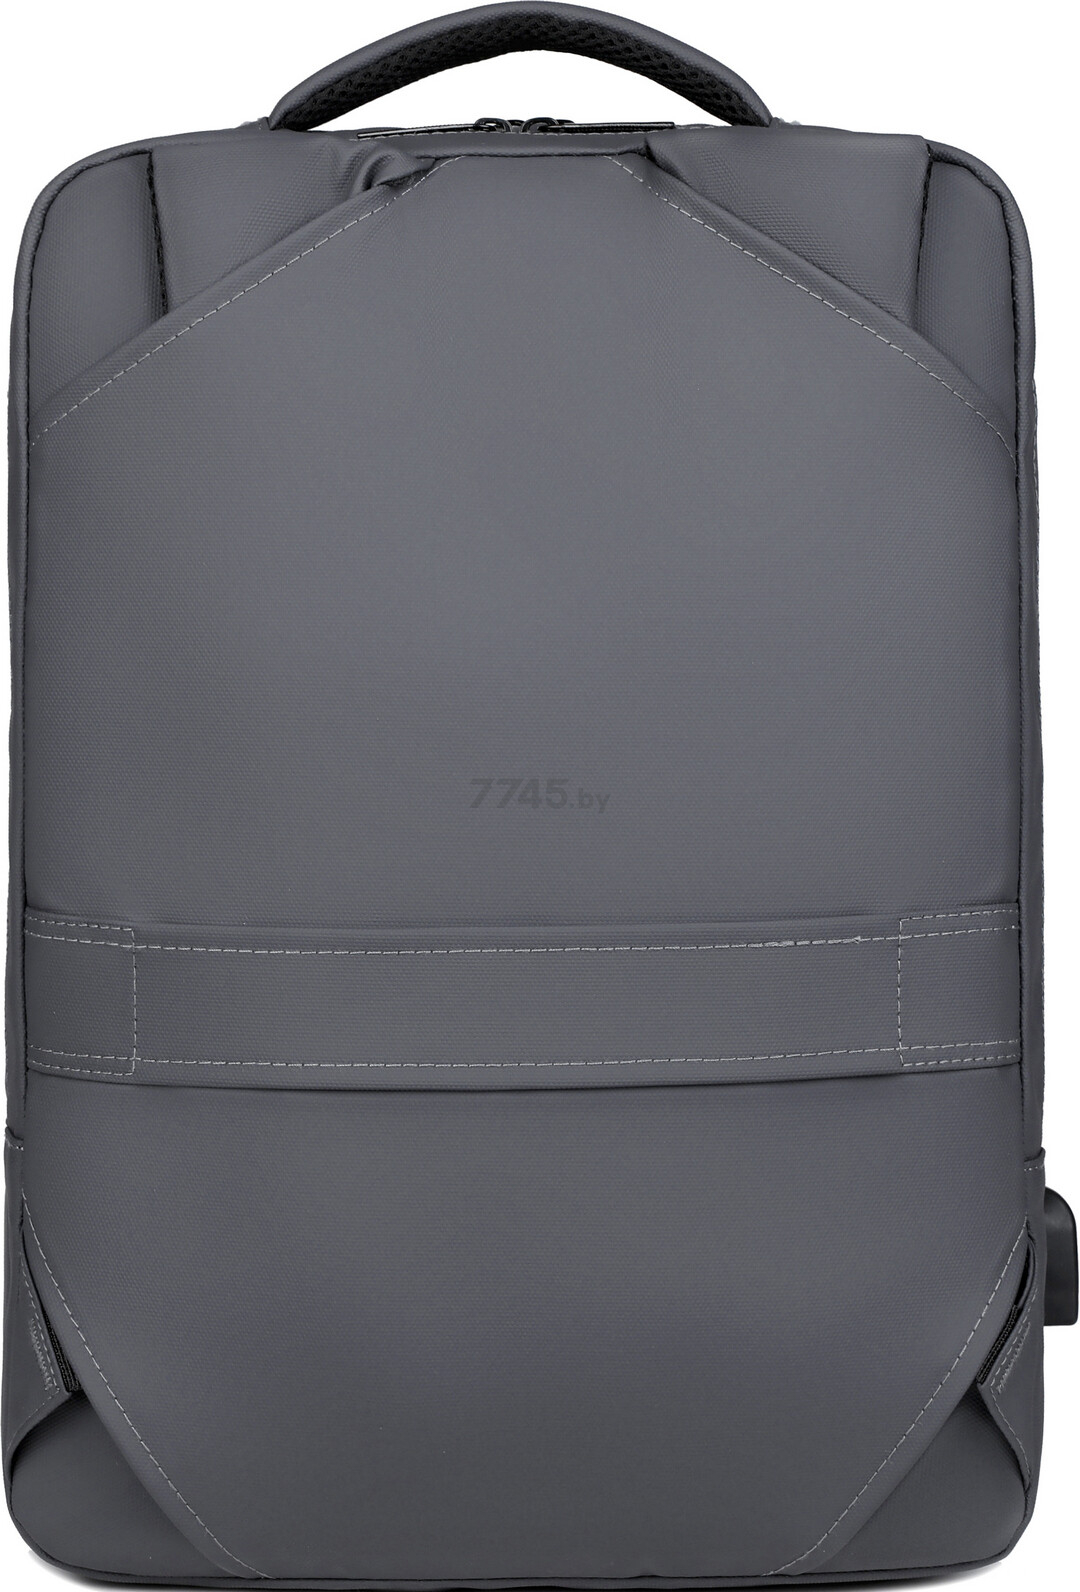 Рюкзак для ноутбука MIRU MBP02 Emotion 15.6" серый - Фото 4